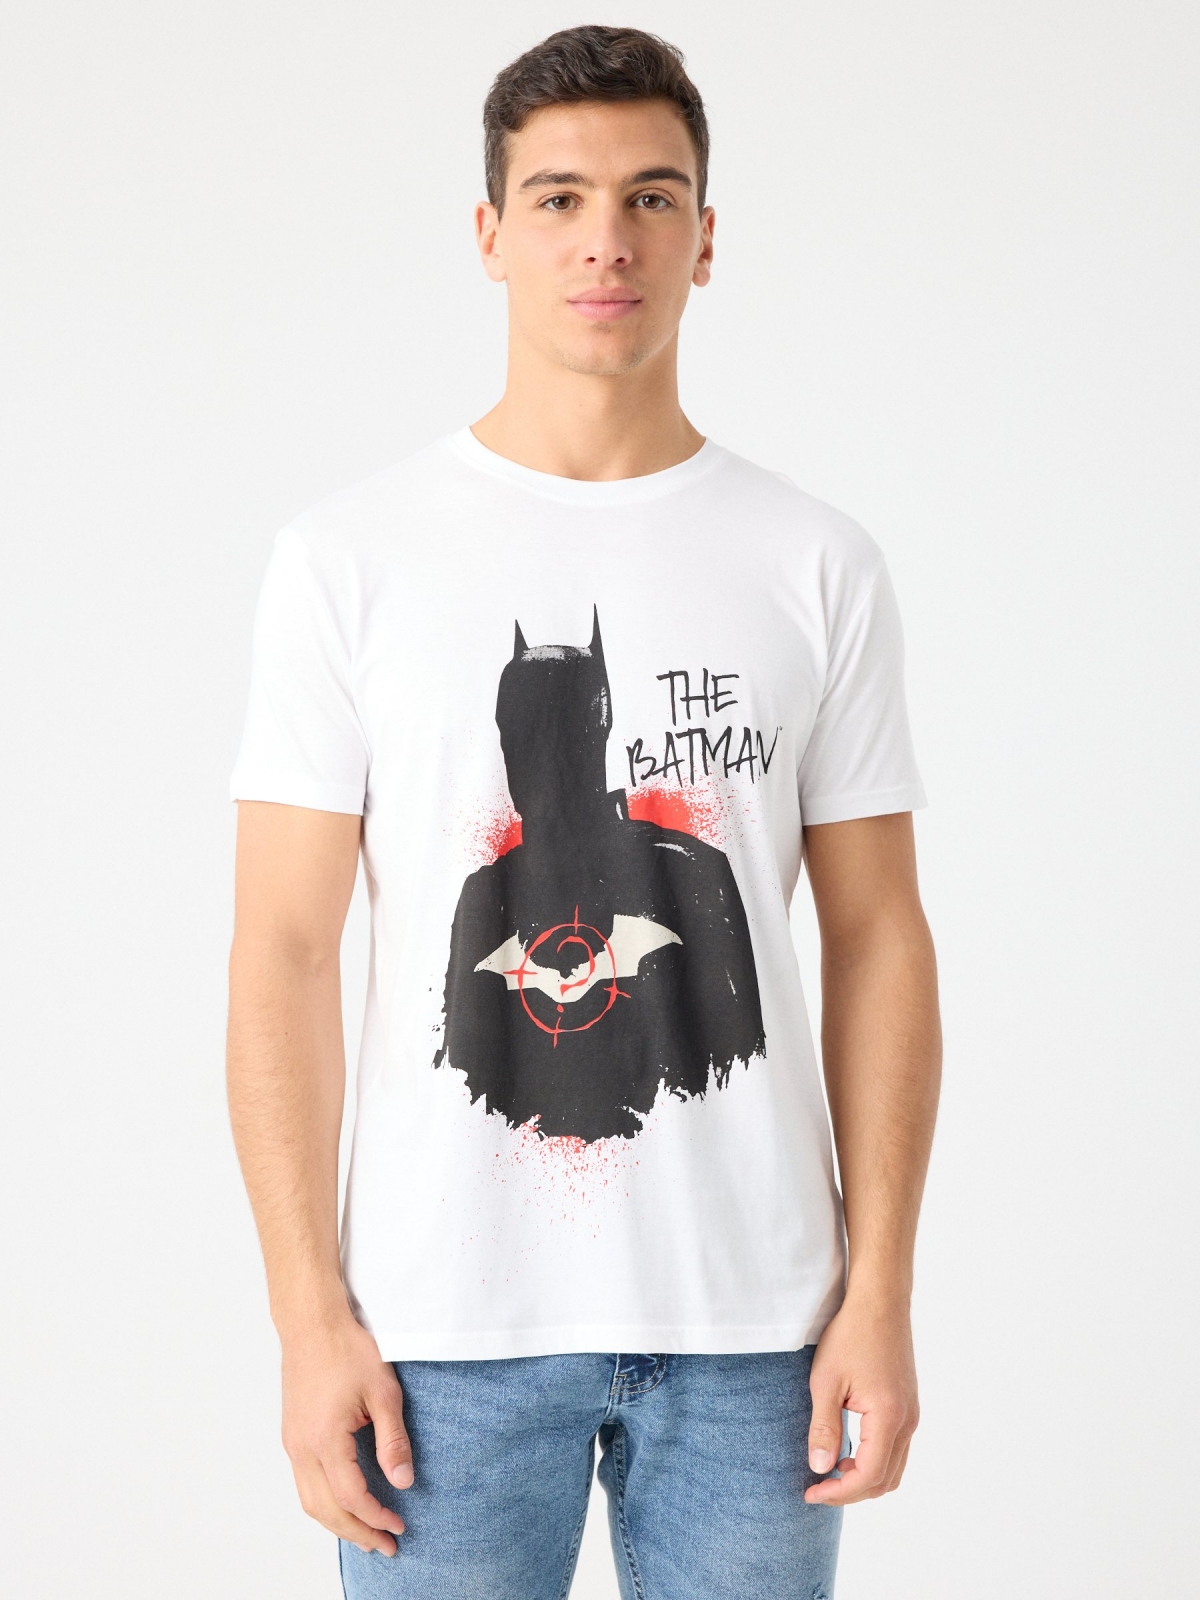 T-shirt do Batman branco vista meia frontal